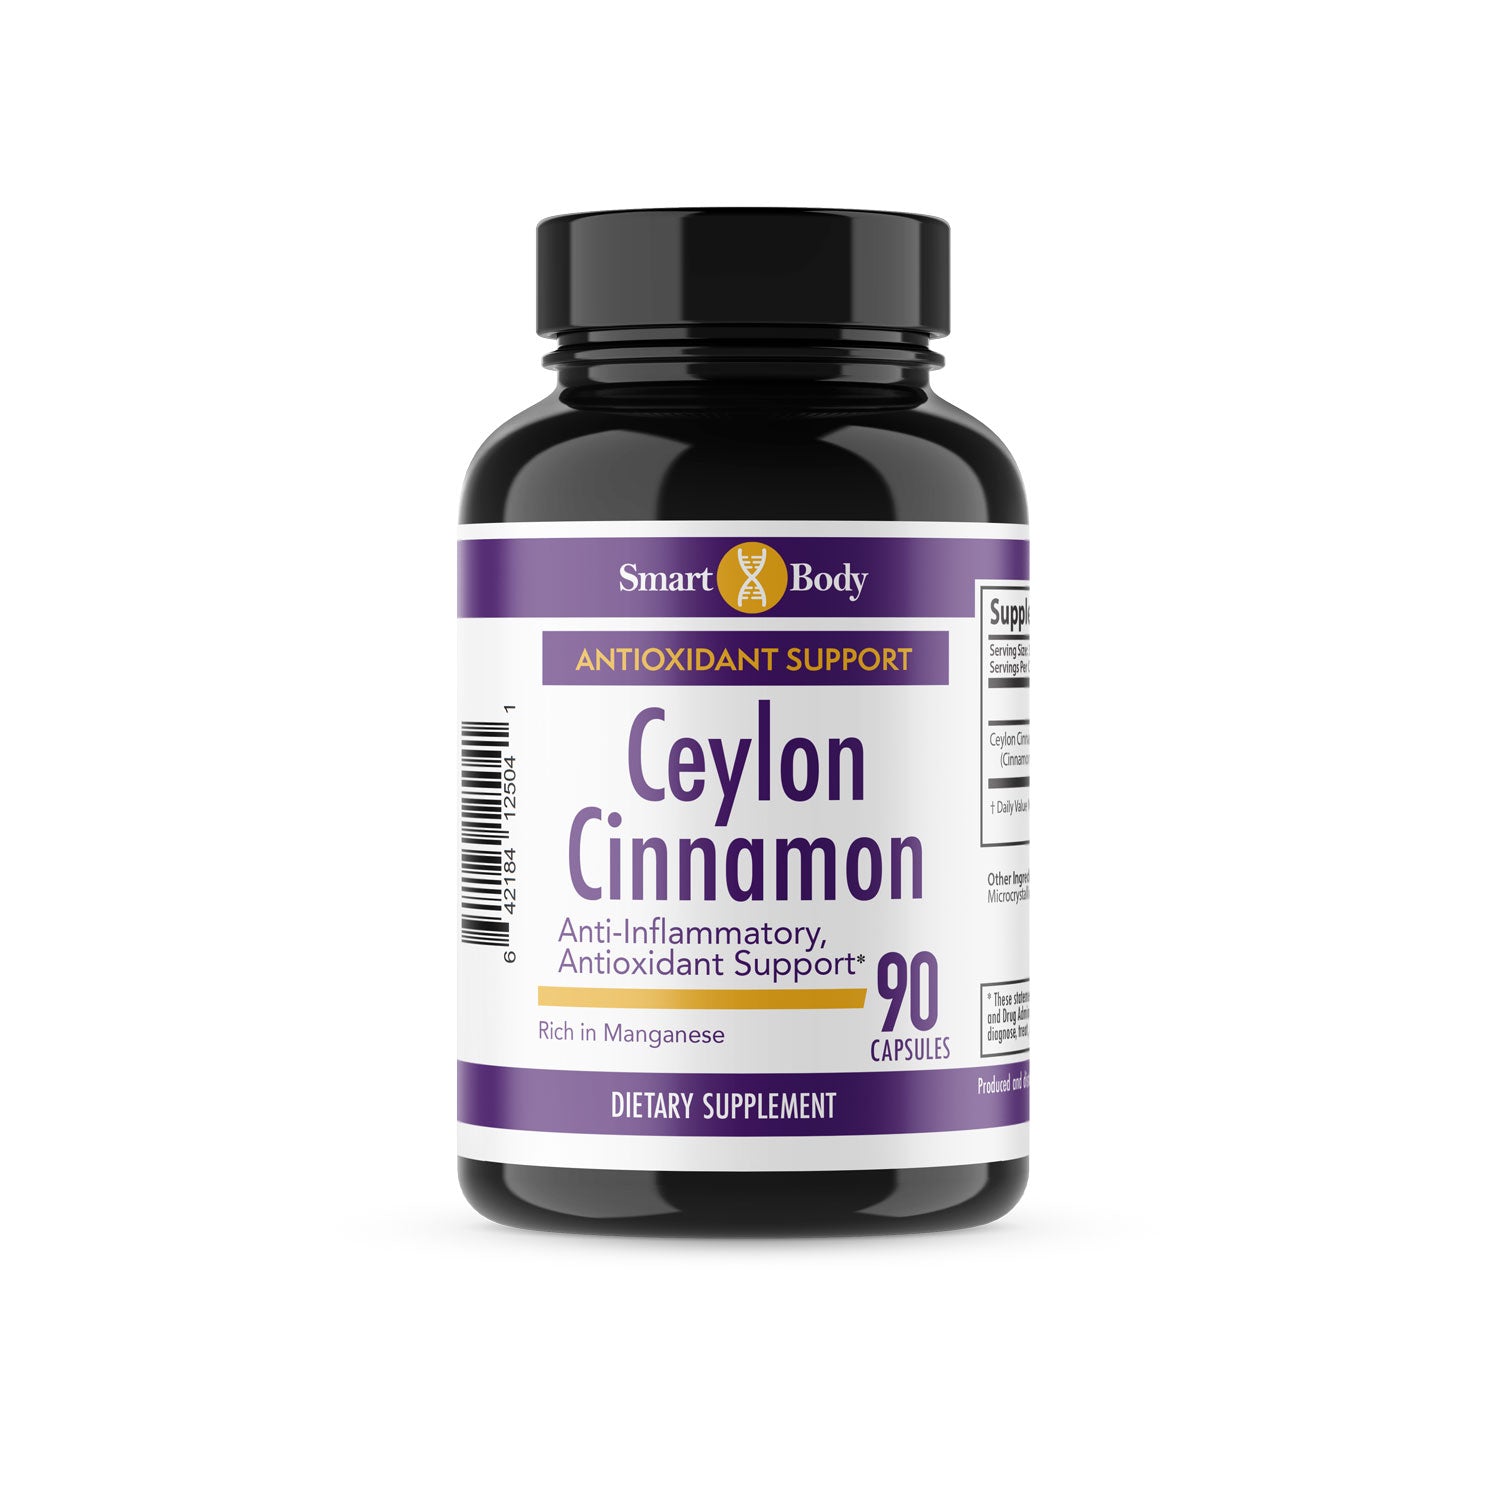 Ceylon Cinnamon - Antioxidant Anti-Inflammatory Anti-Microbial†